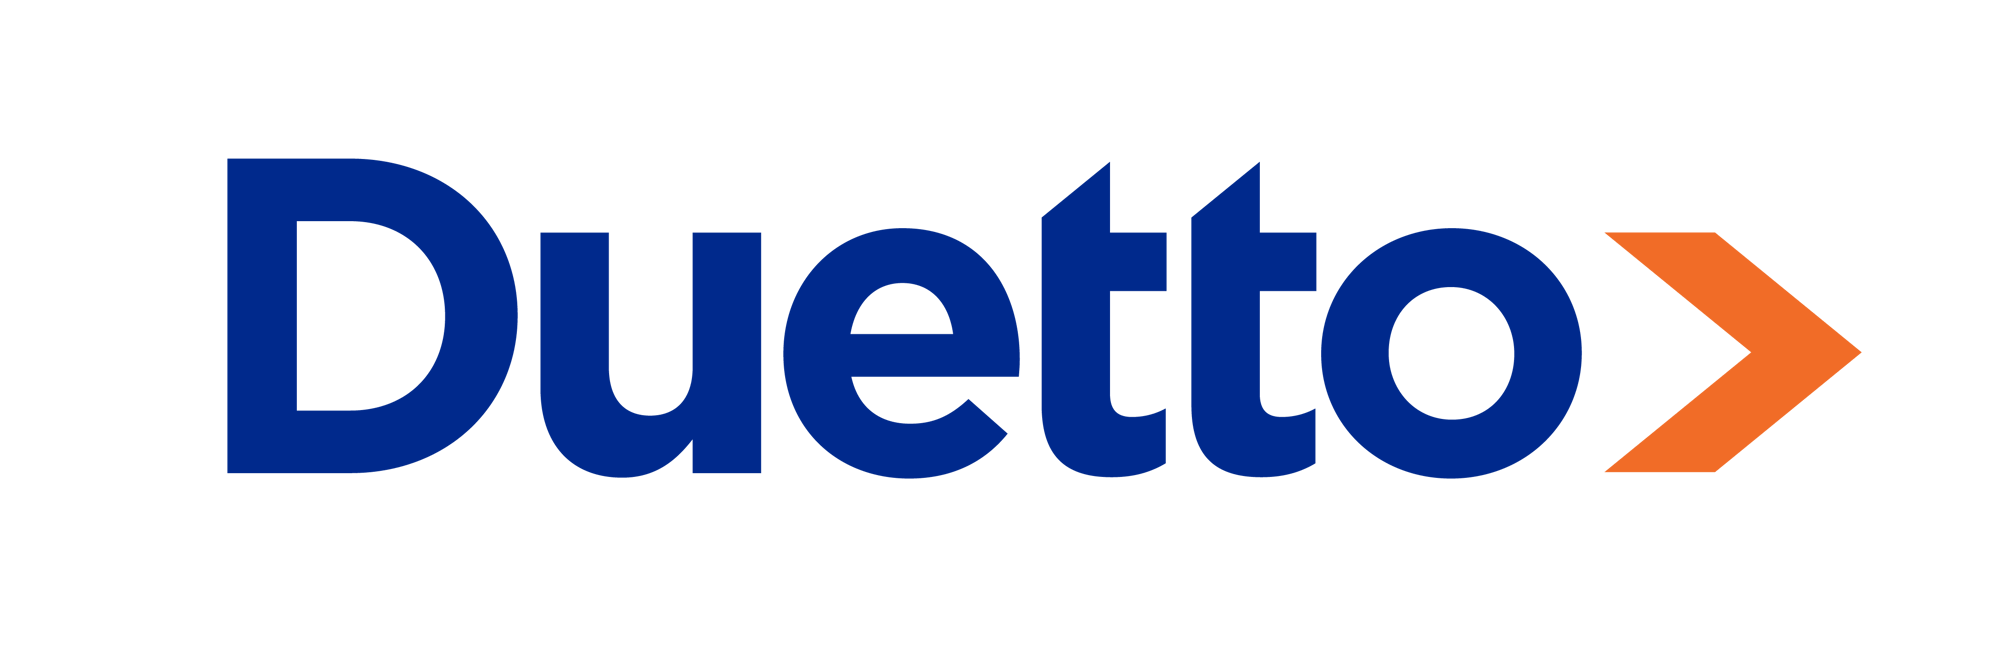 Duetto logo-RGB-blueorange (2)